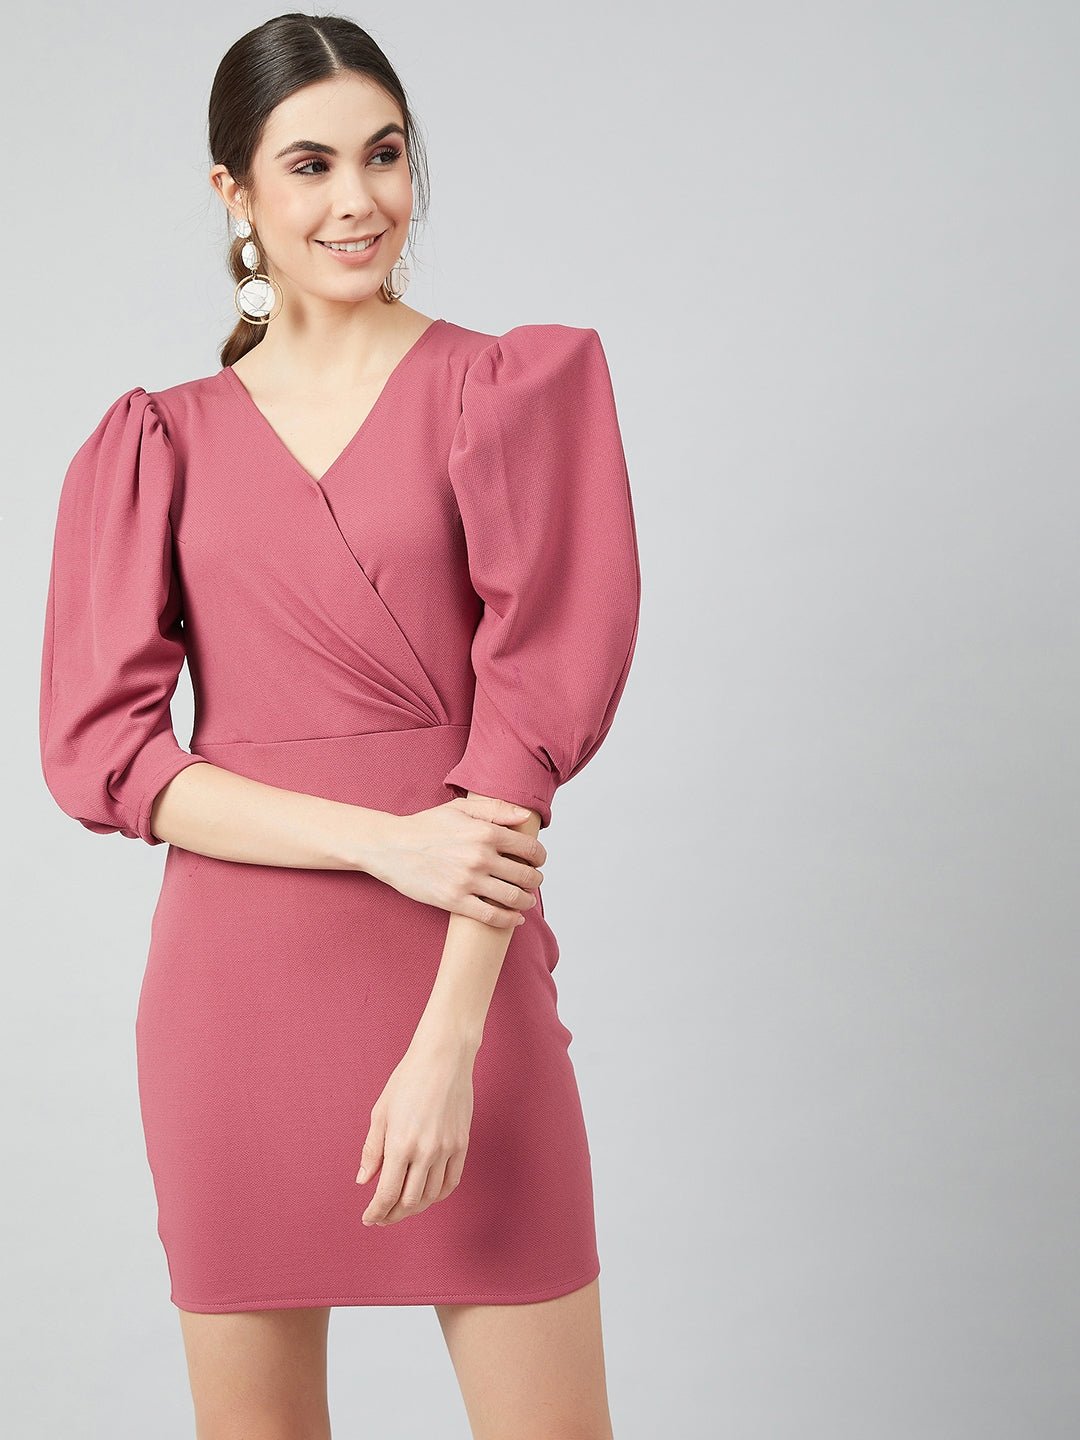 Athena Women Pink Solid Wrap Dress - Athena Lifestyle